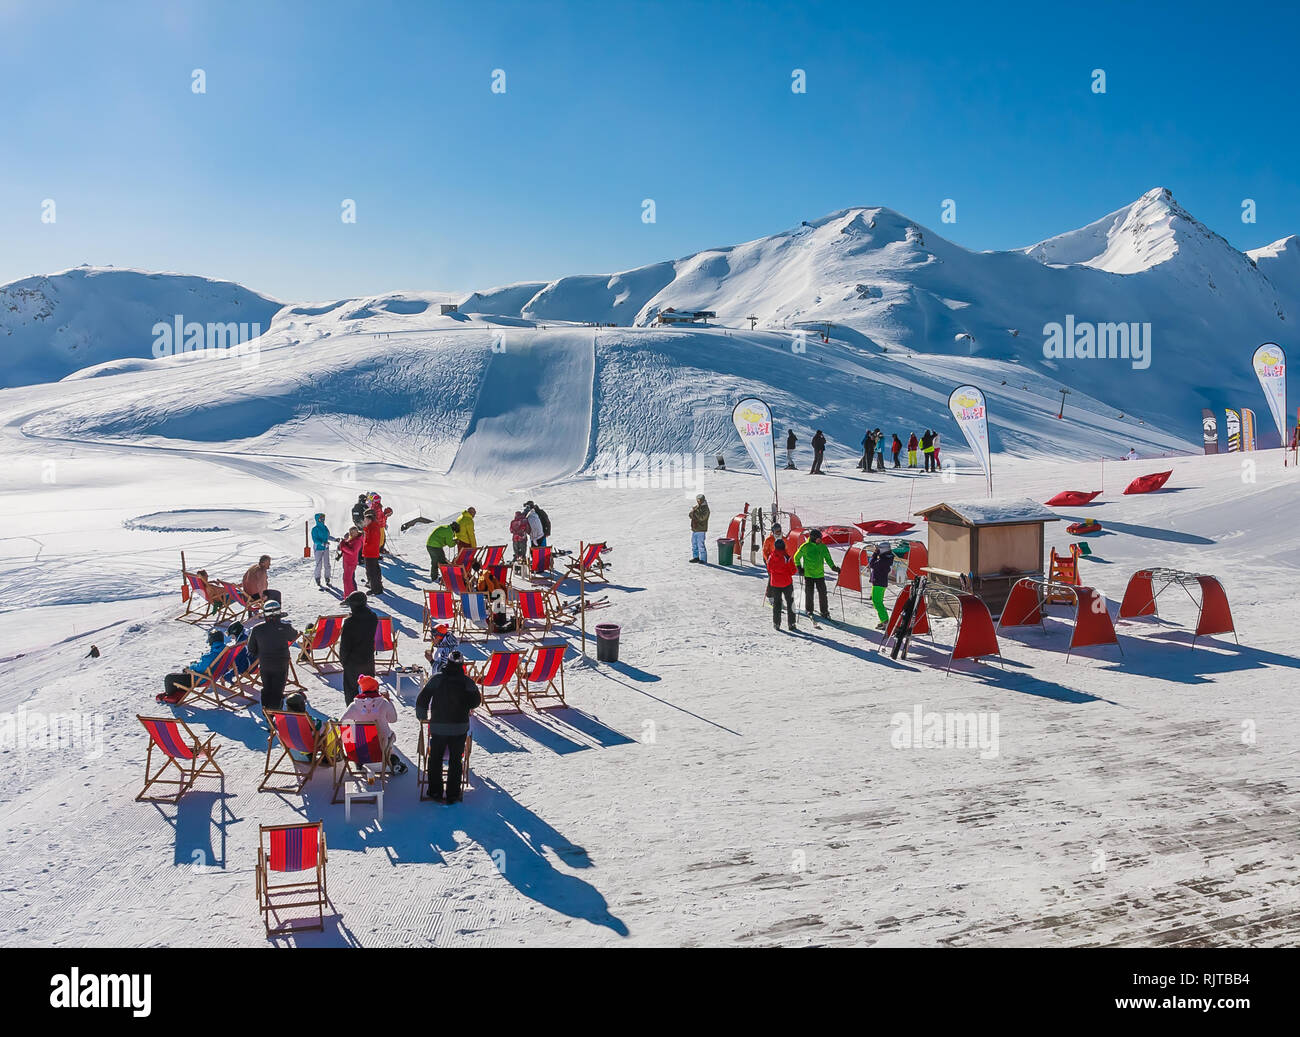 Ski resort Livigno. Italy Stock Photo: 235334376 - Alamy